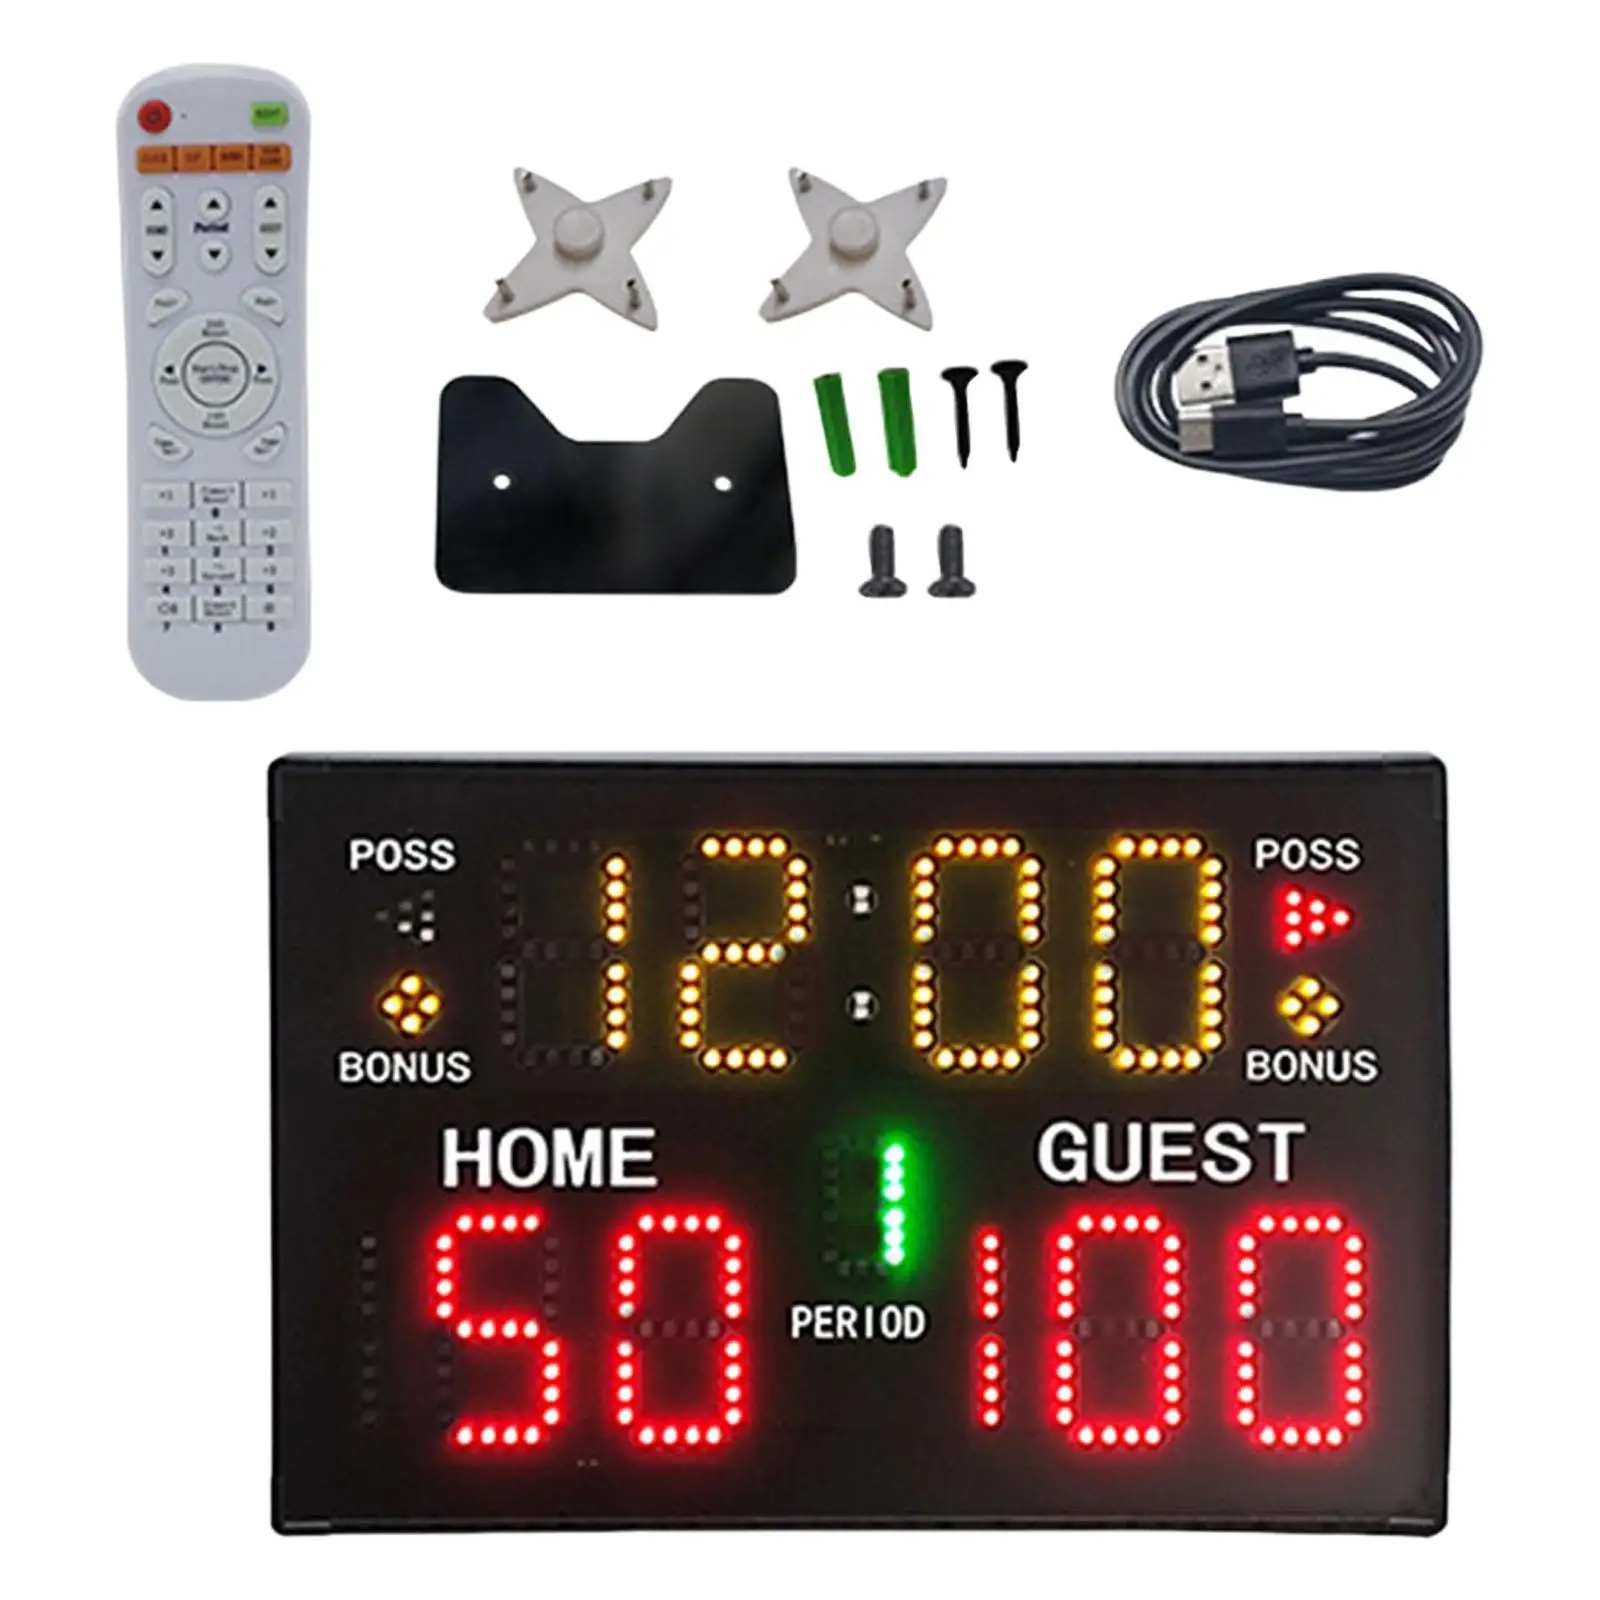 Tabletop Digital Scoreboard Battery Powered Score Keeper for Indoor